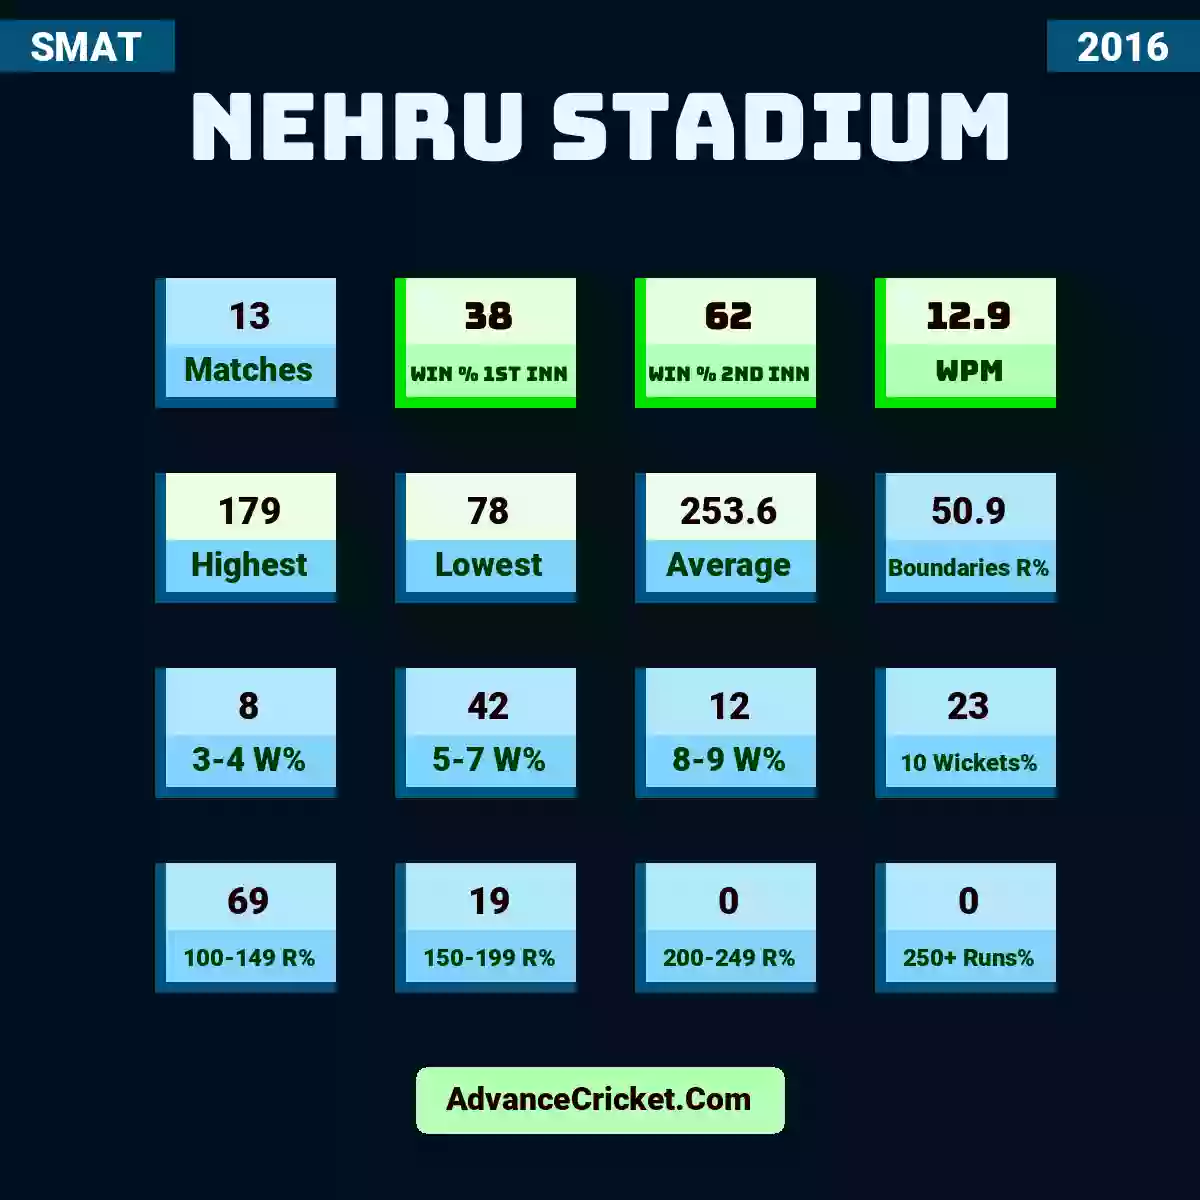 Image showing Nehru Stadium with Matches: 13, Win % 1st Inn: 38, Win % 2nd Inn: 62, WPM: 12.9, Highest: 179, Lowest: 78, Average: 253.6, Boundaries R%: 50.9, 3-4 W%: 8, 5-7 W%: 42, 8-9 W%: 12, 10 Wickets%: 23, 100-149 R%: 69, 150-199 R%: 19, 200-249 R%: 0, 250+ Runs%: 0.